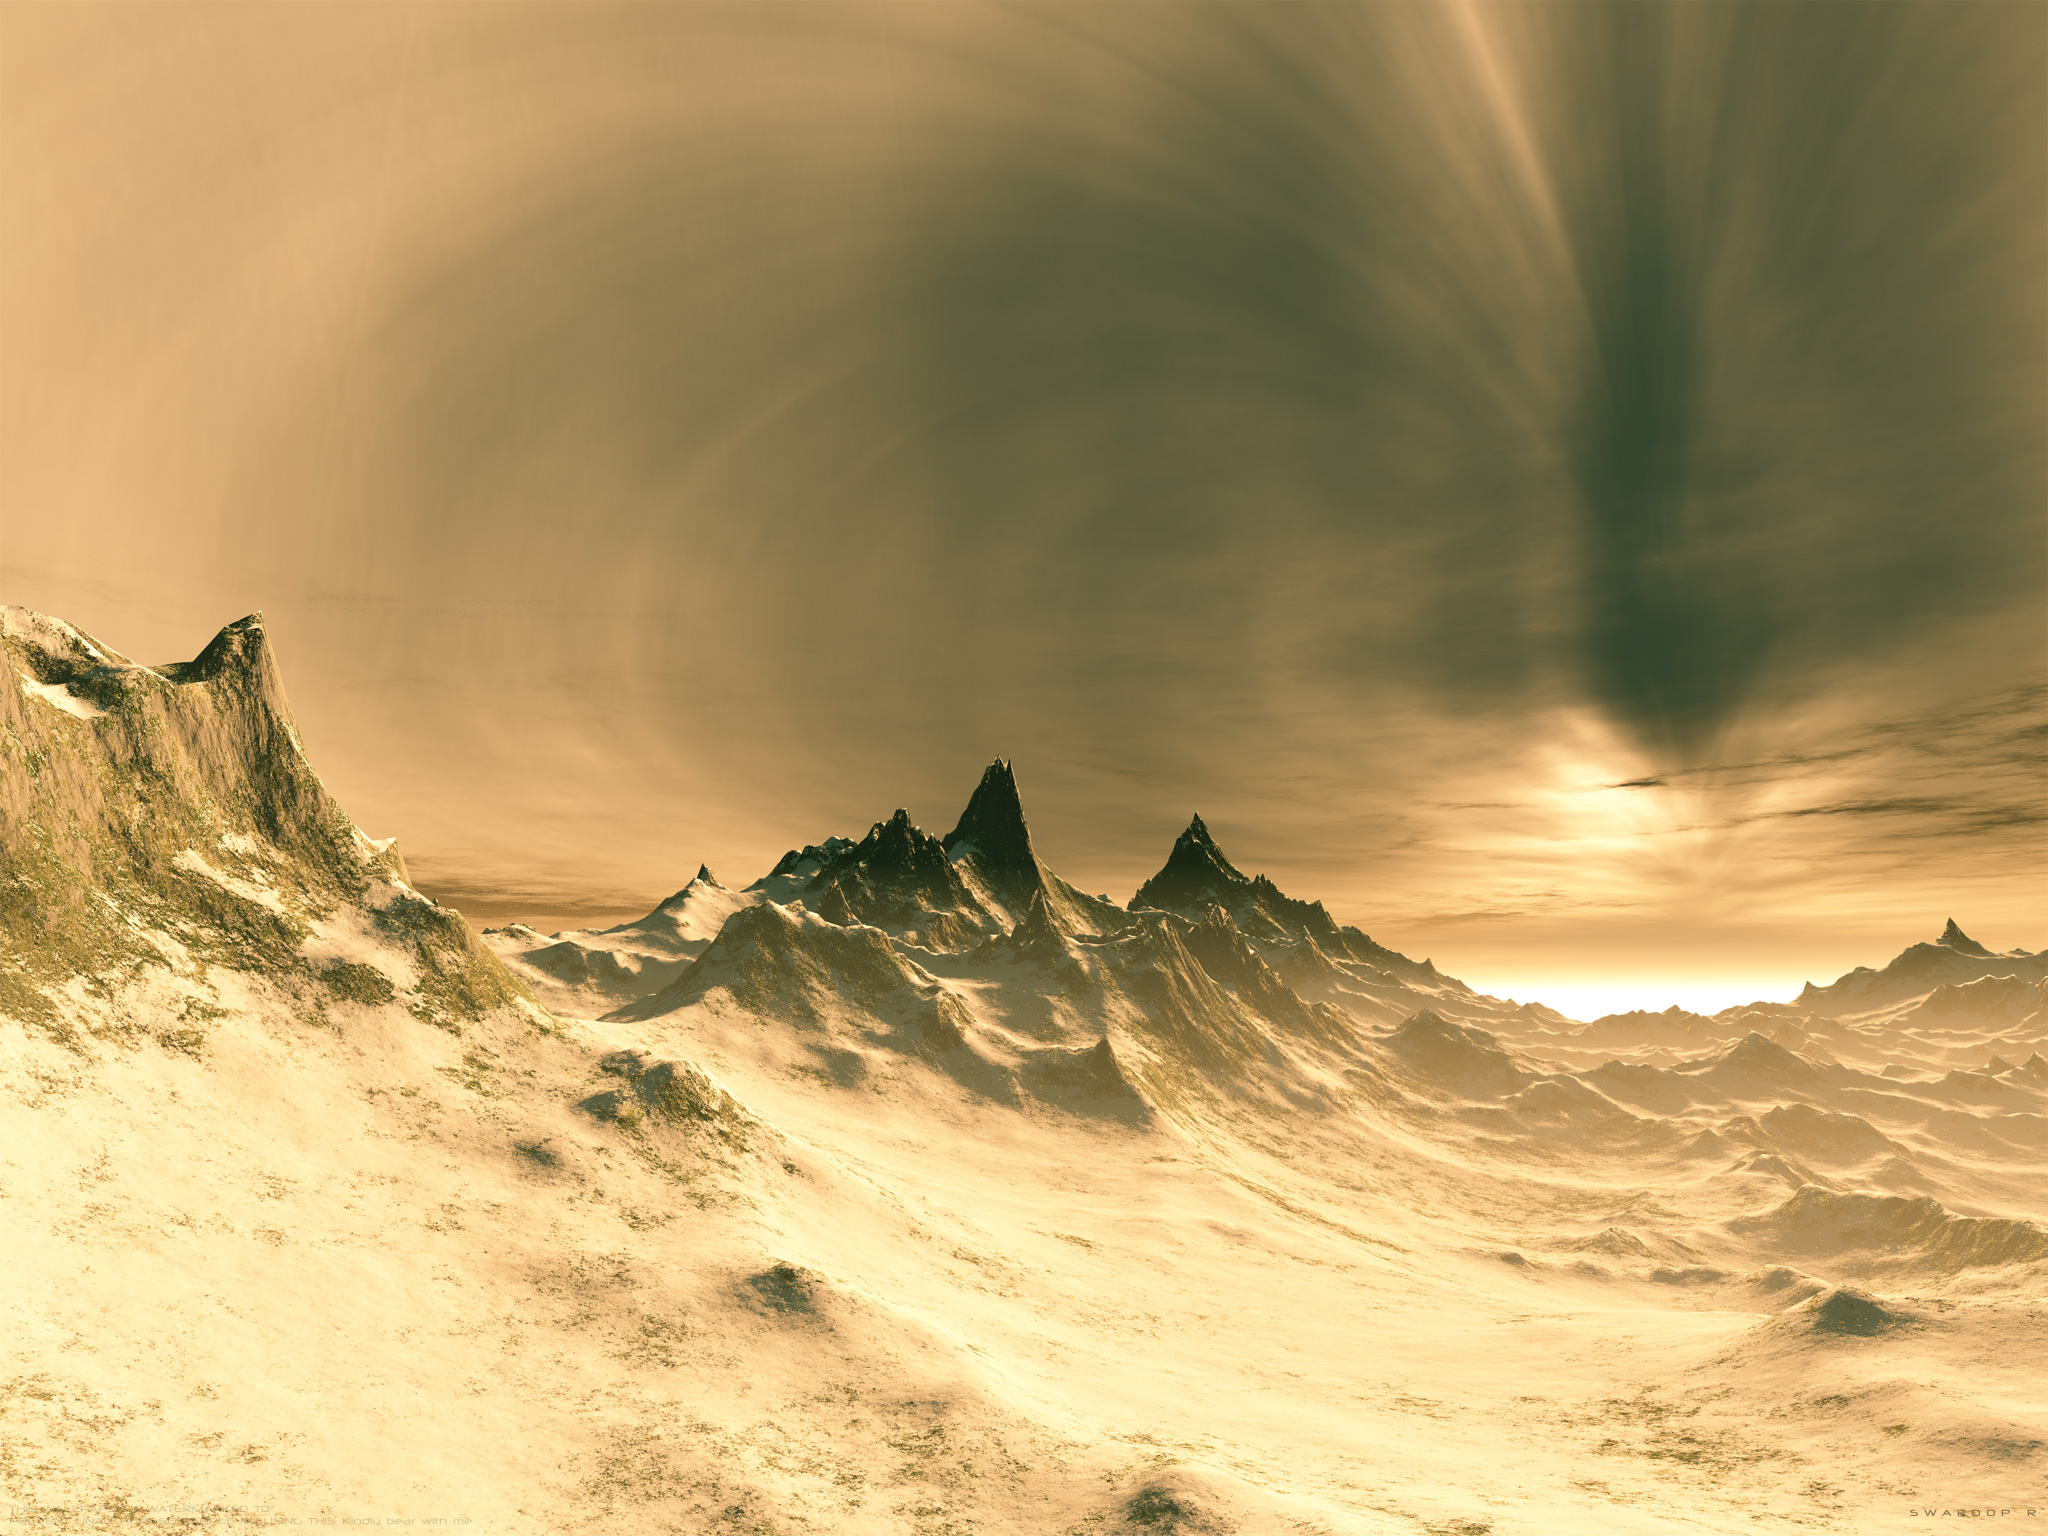 Majestic mountain landscape as a high-resolution desktop wallpaper.